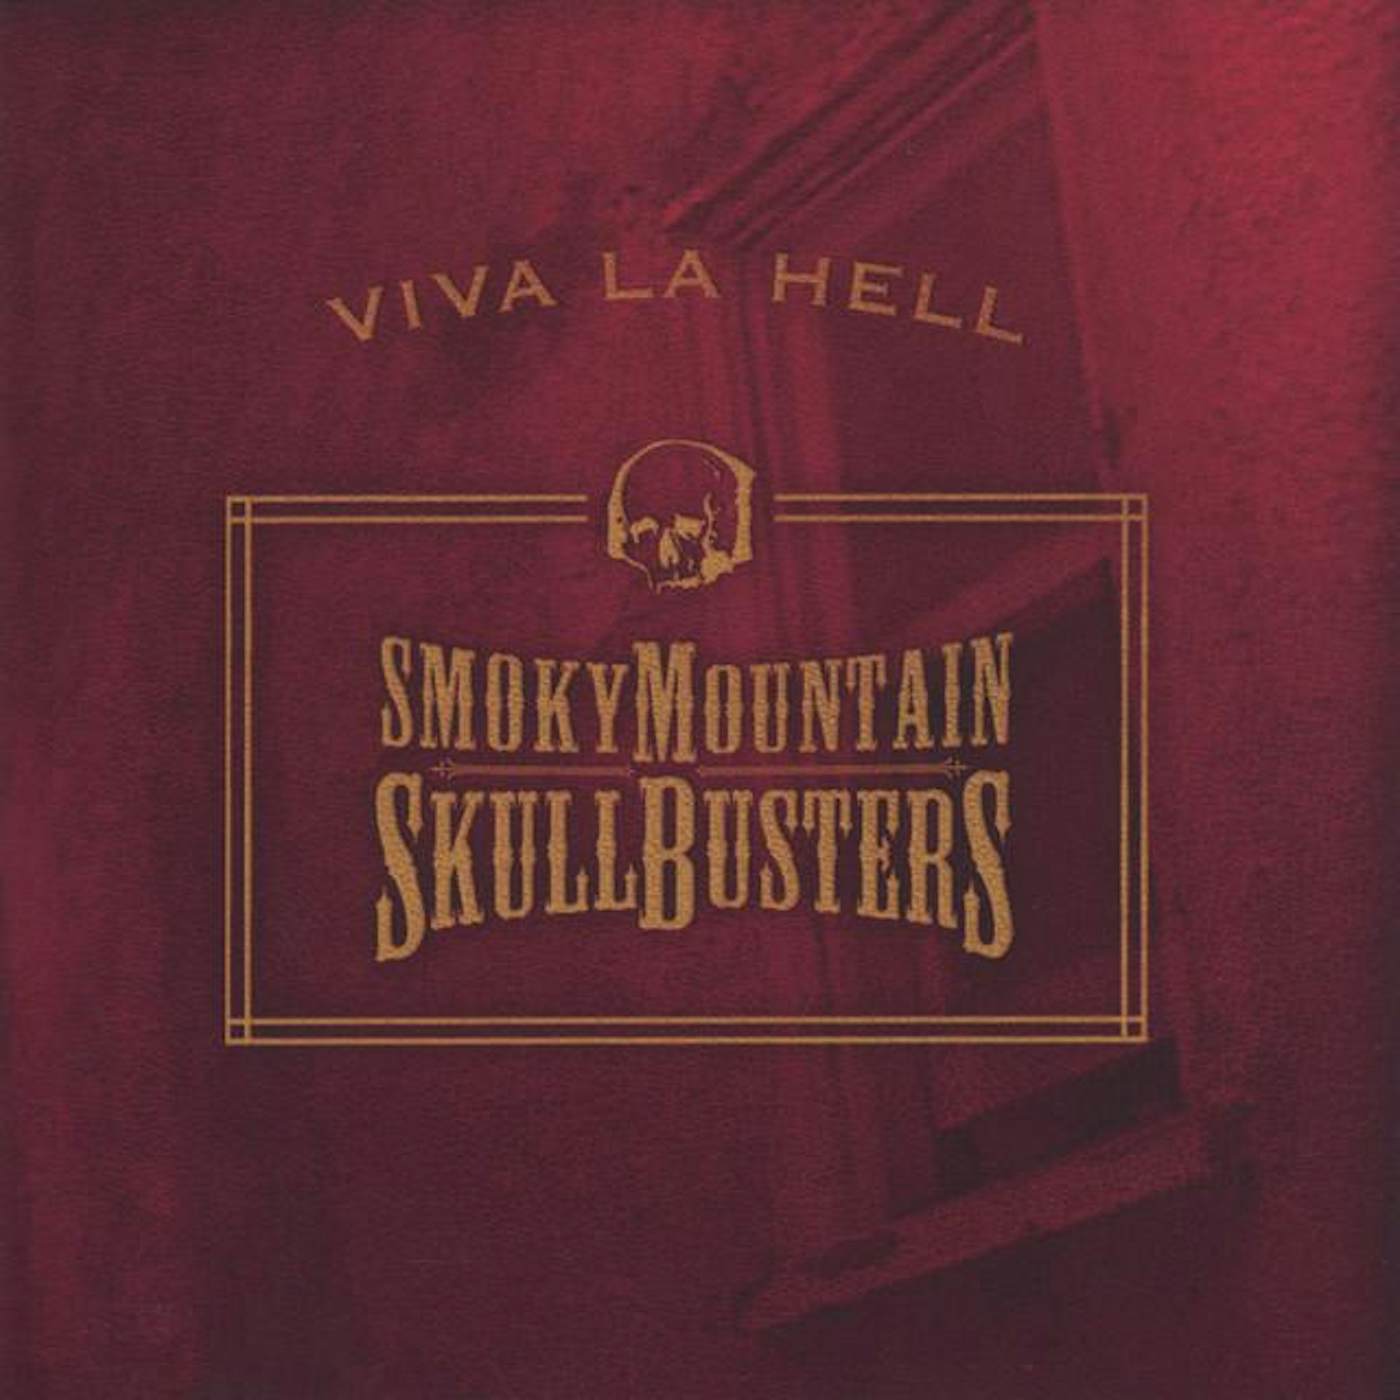 Smoky Mountain Skullbusters